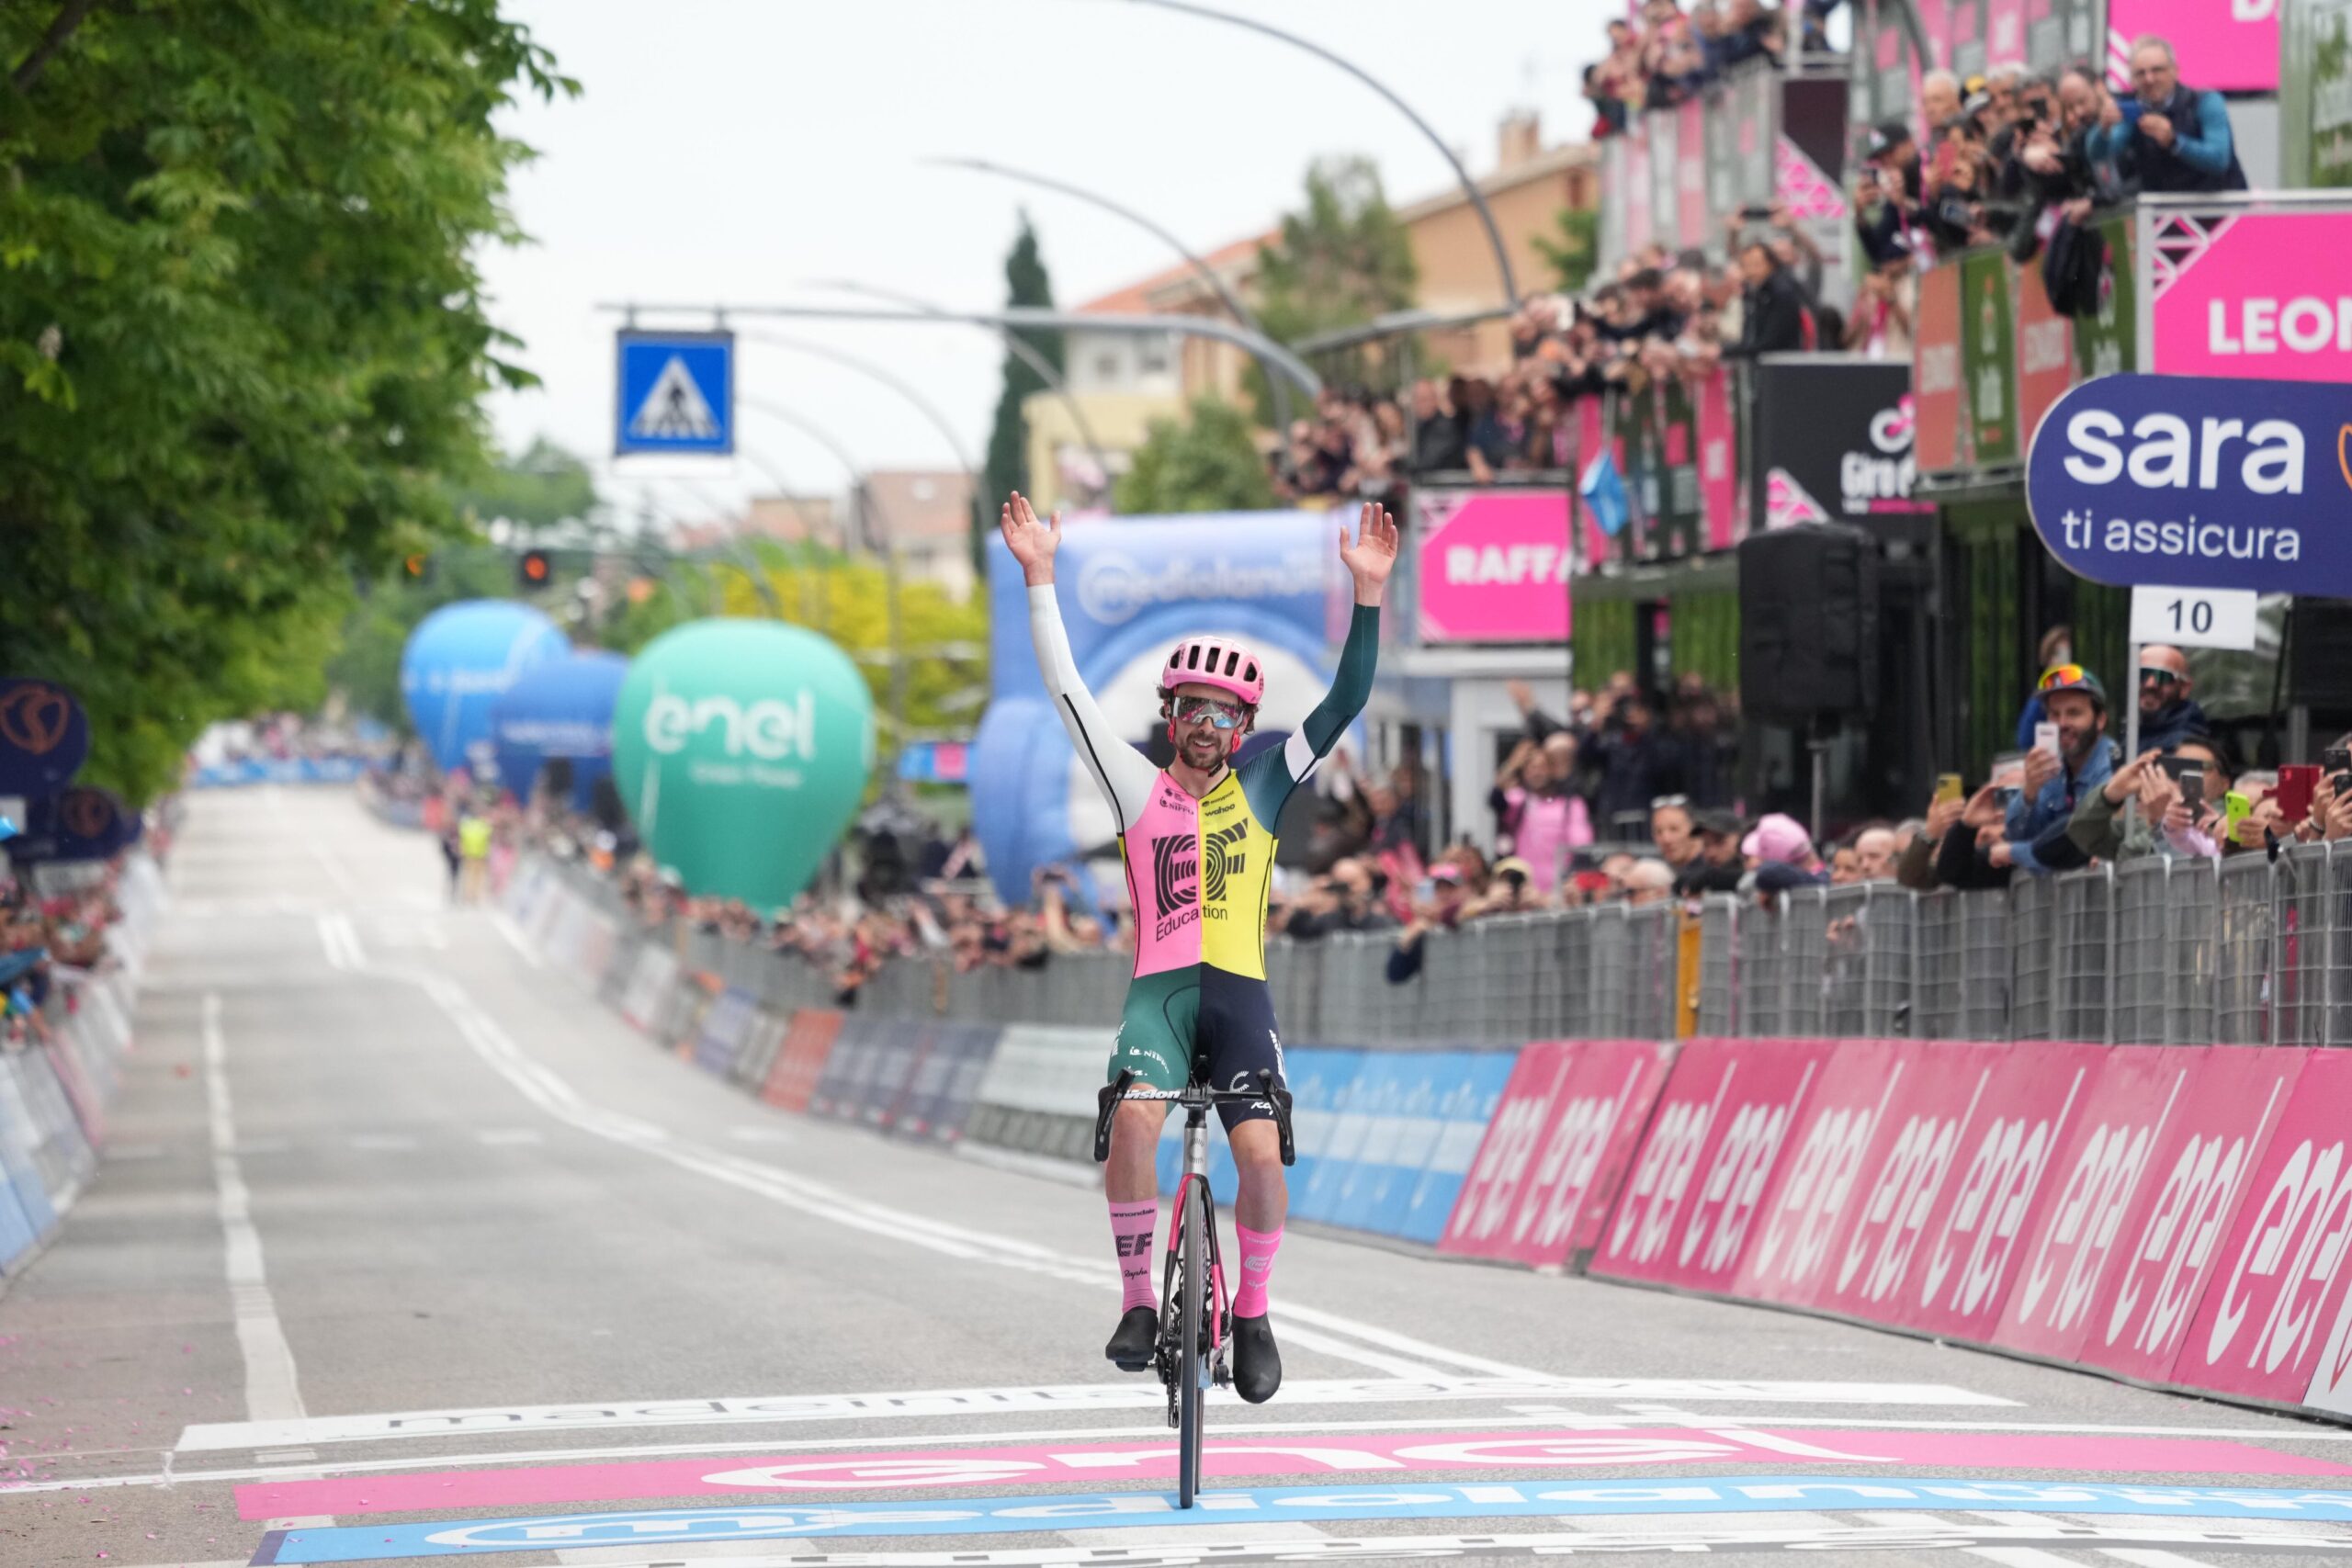 Fonte immagine: Twitter ufficiale Giro d’Italia